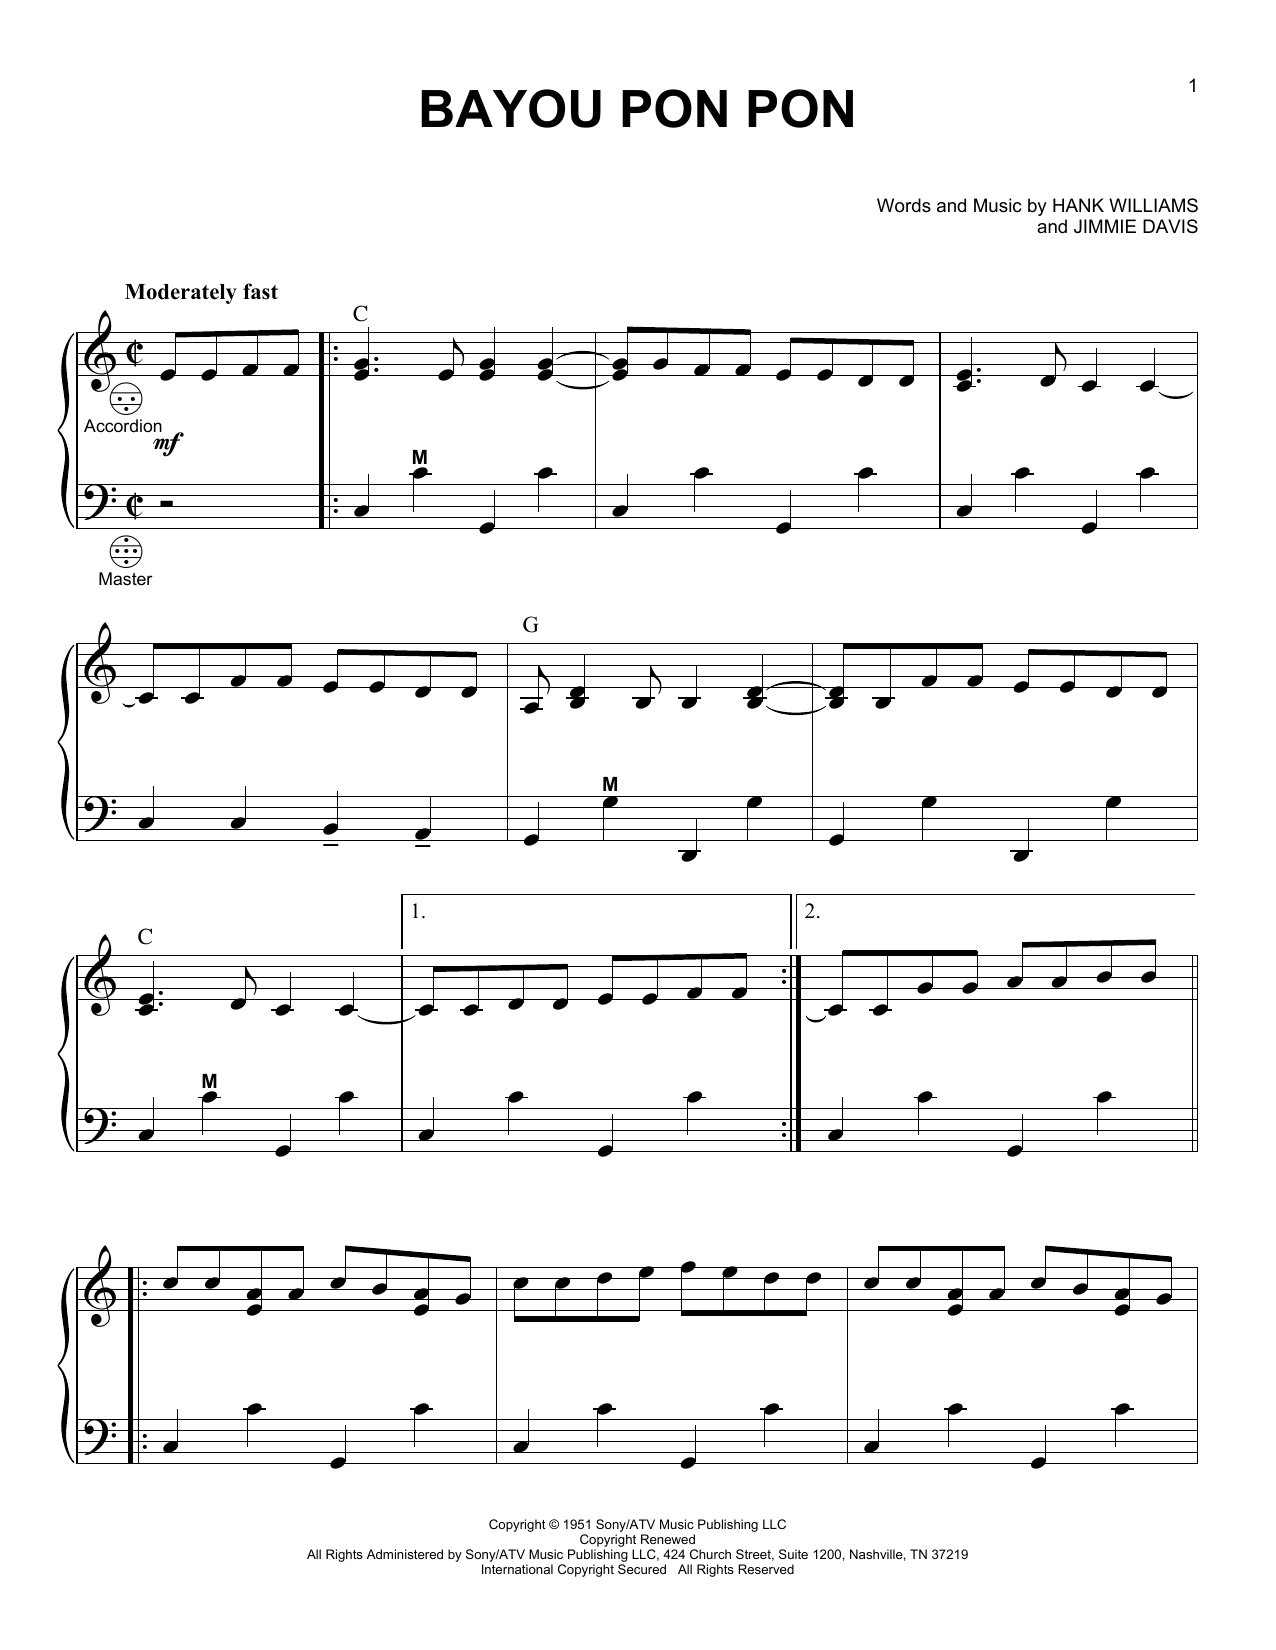 Hank Williams Bayou Pon Pon Sheet Music Notes & Chords for Accordion - Download or Print PDF